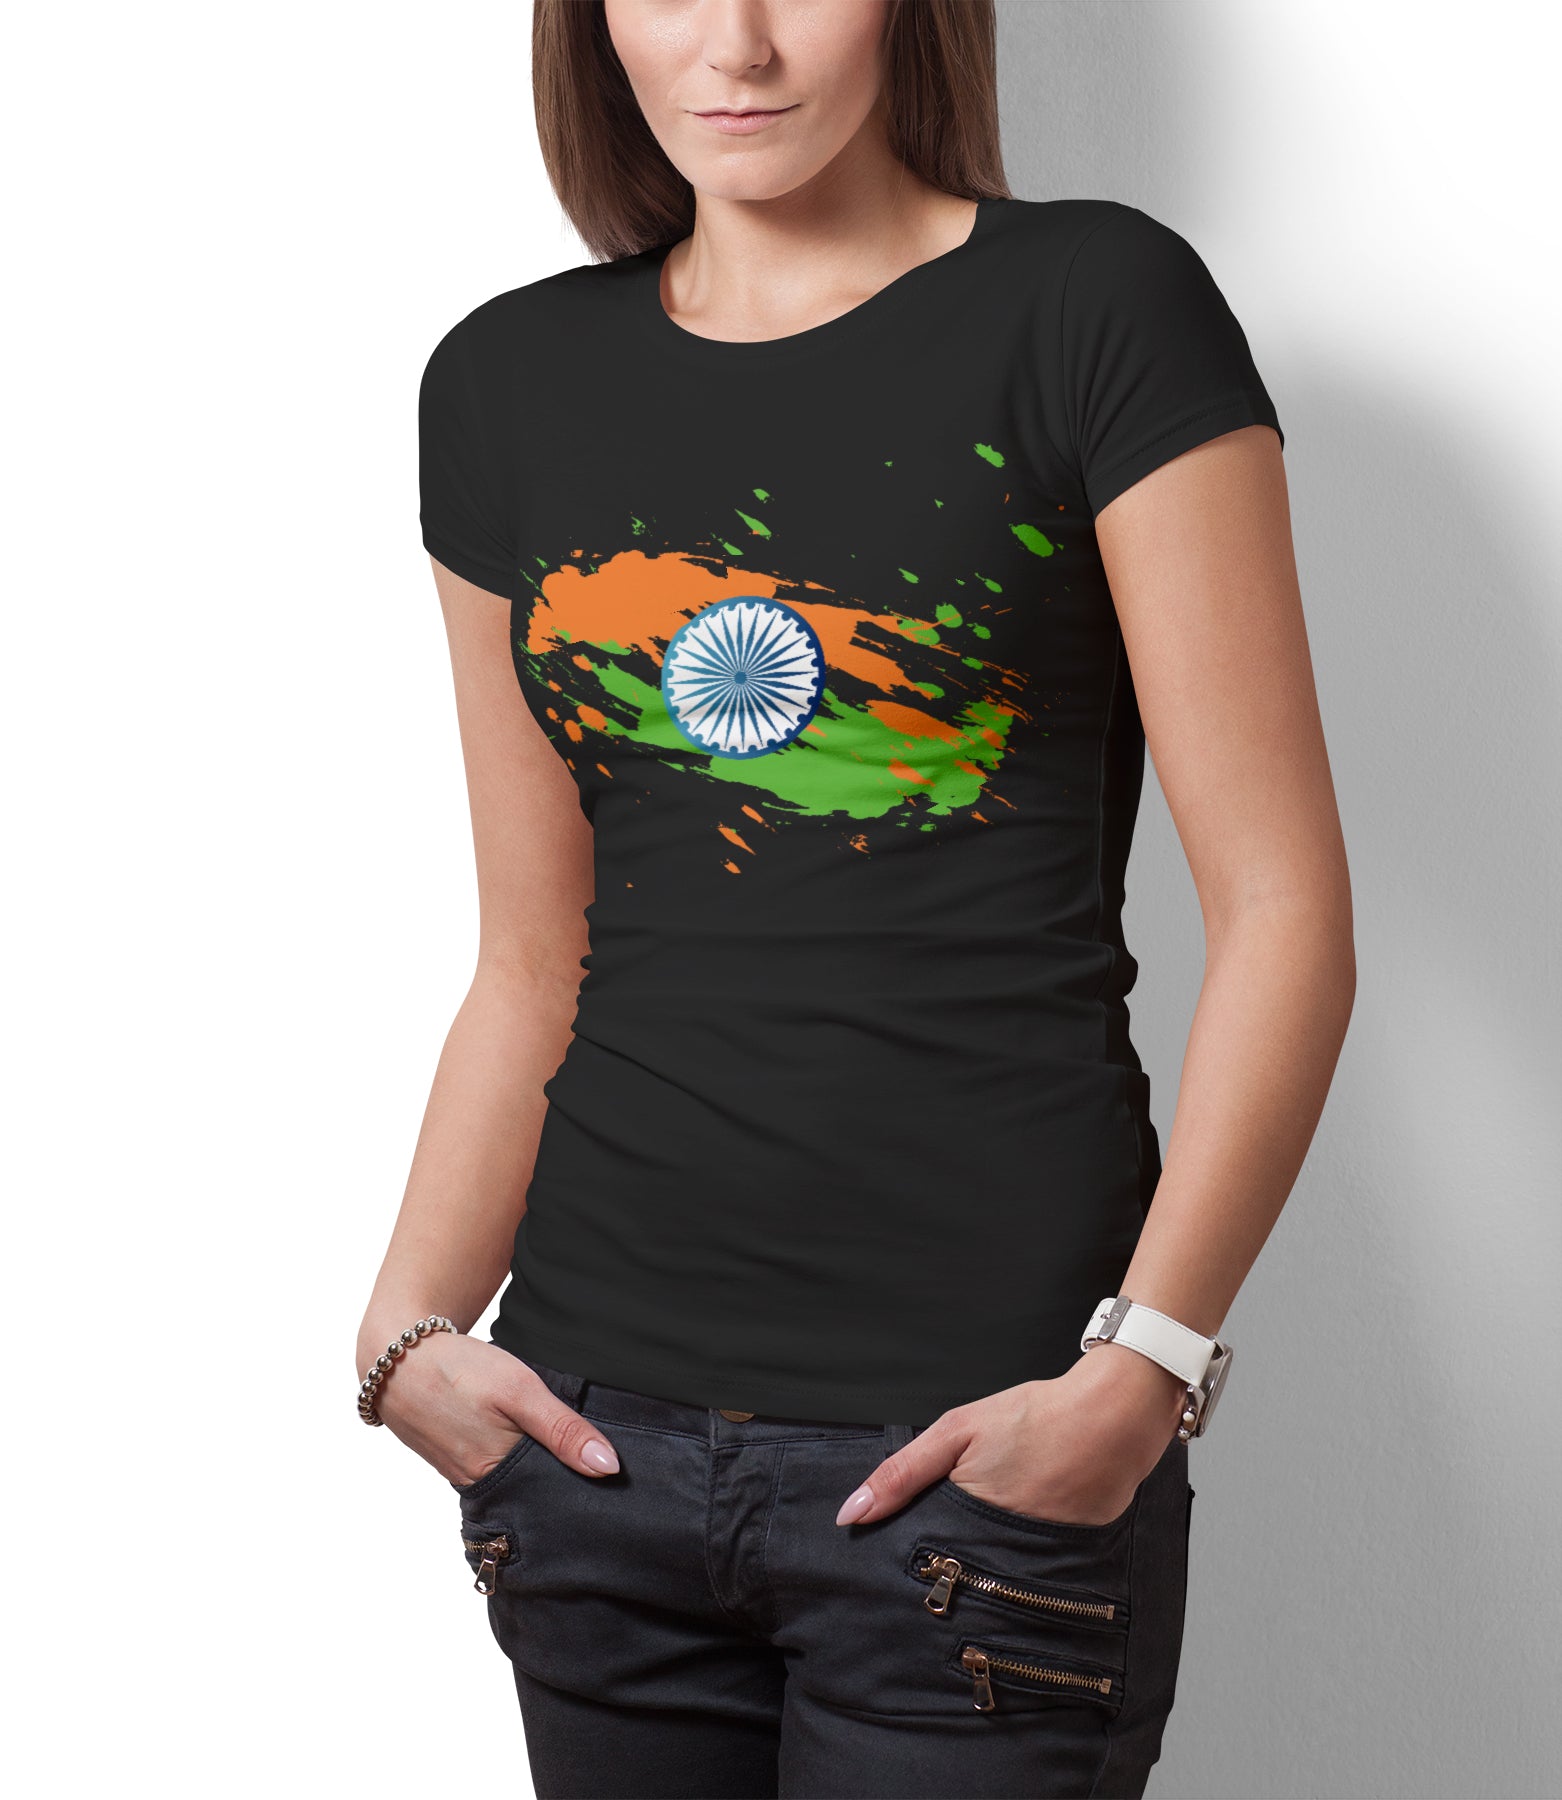 Independence day t shirts, Republic day tshirt, India tshirts - Black 08